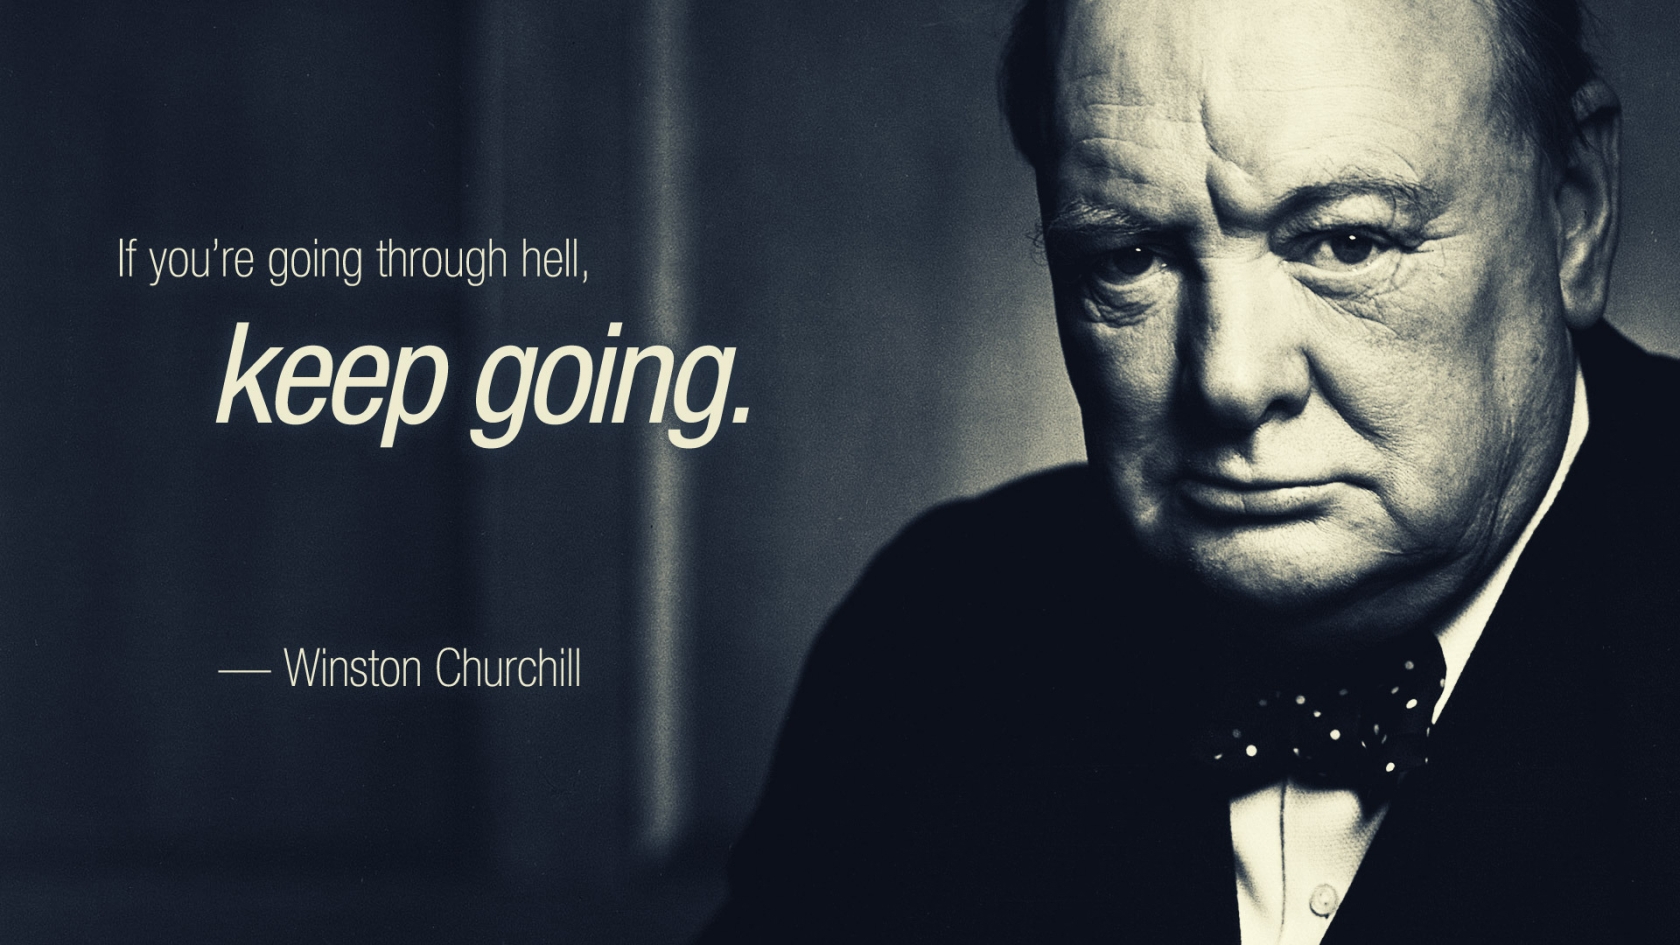 Winston Churchill Quote for 1680 x 945 HDTV resolution